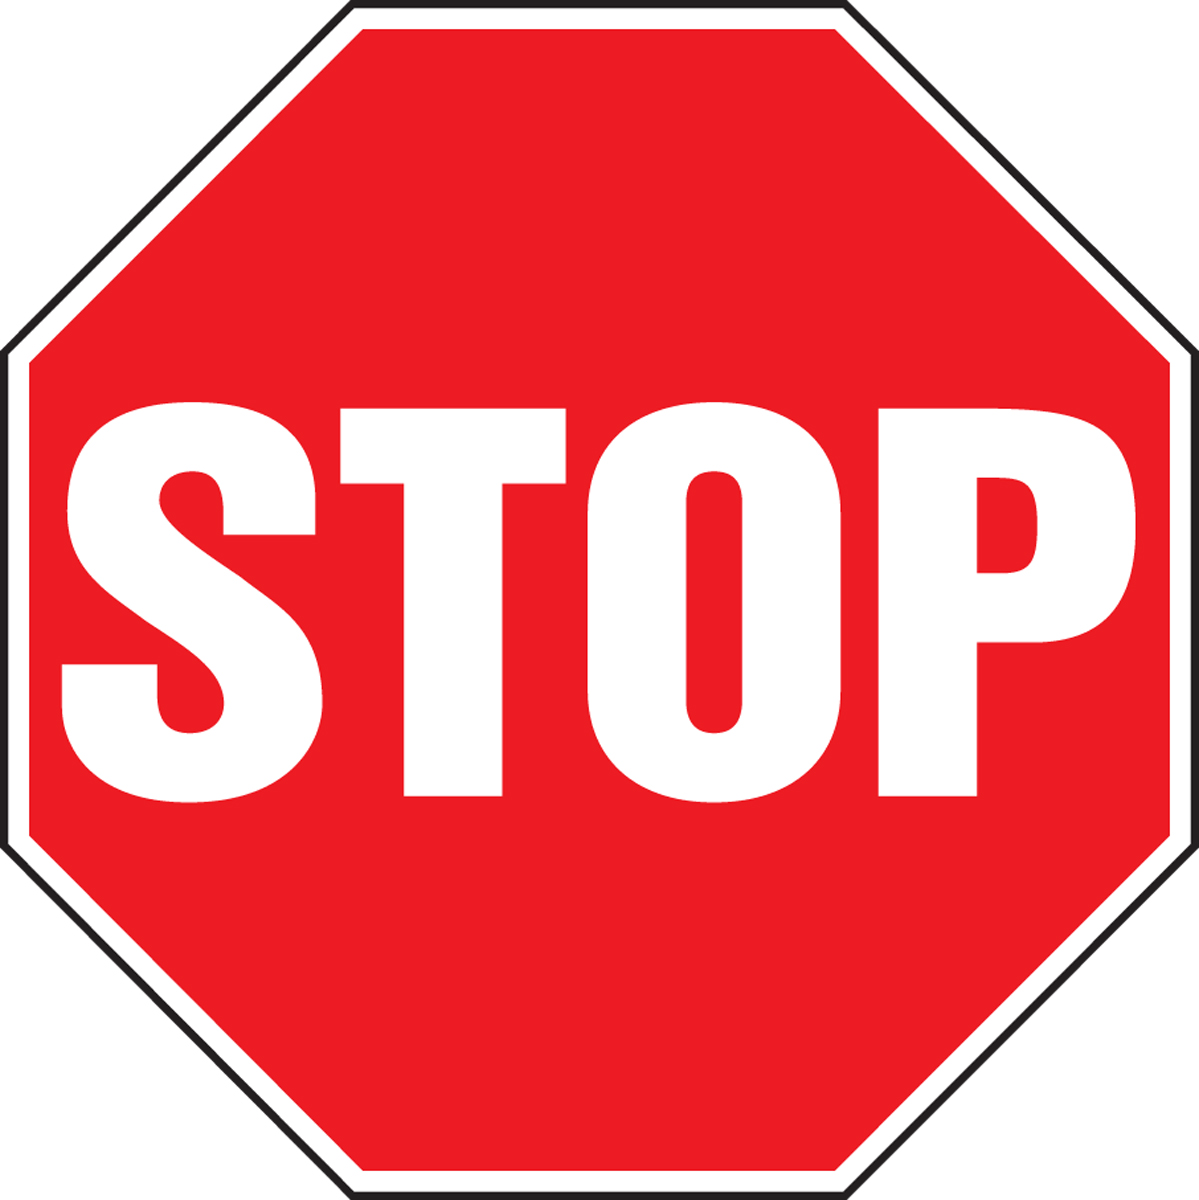 Safety Sign, Legend: STOP